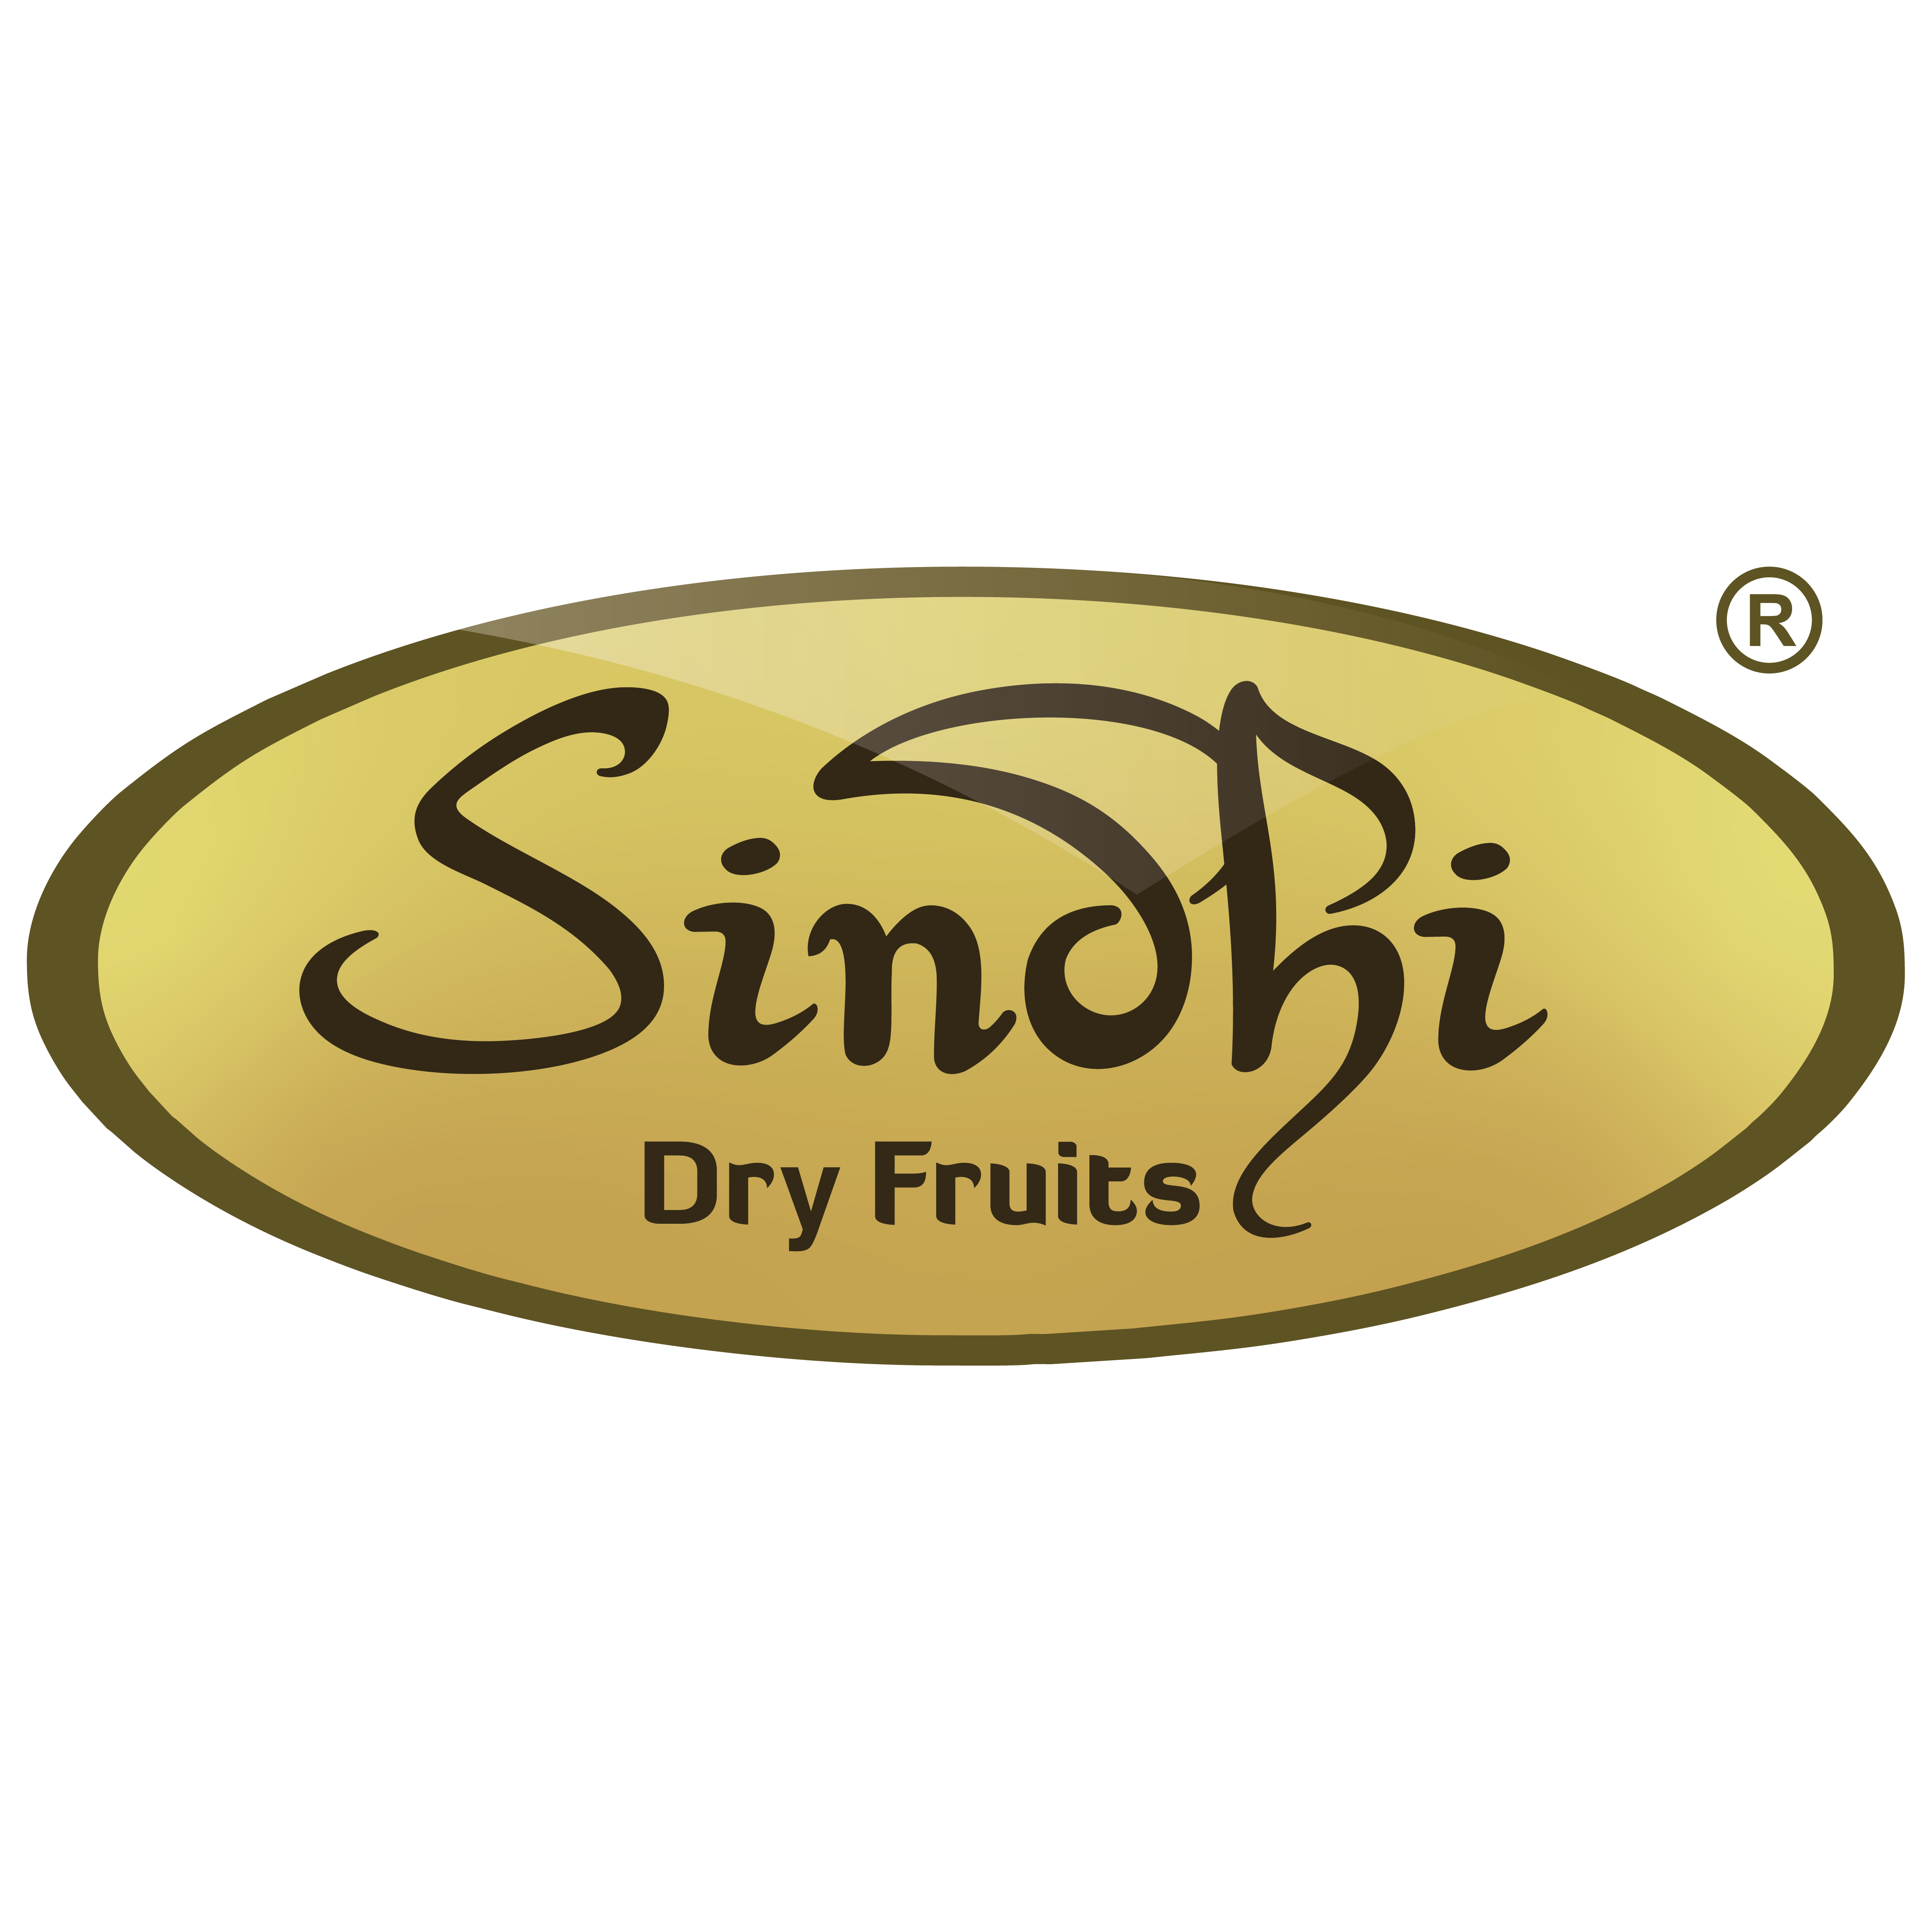 Sindhidryfruits - SeoRachana Client